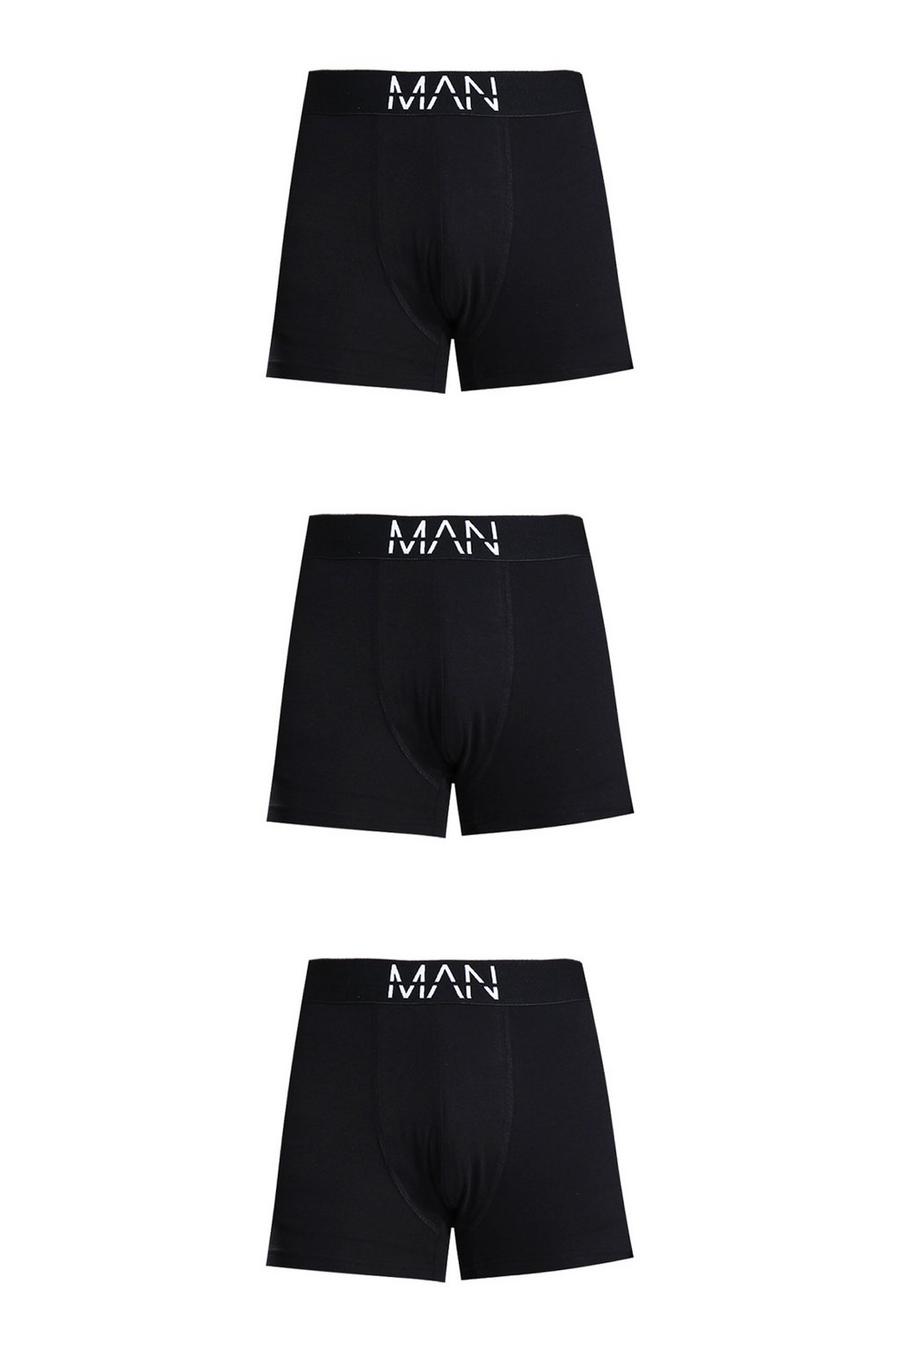 Black Plus Size Middellange Man Dash Boxers (3 Stuks) image number 1